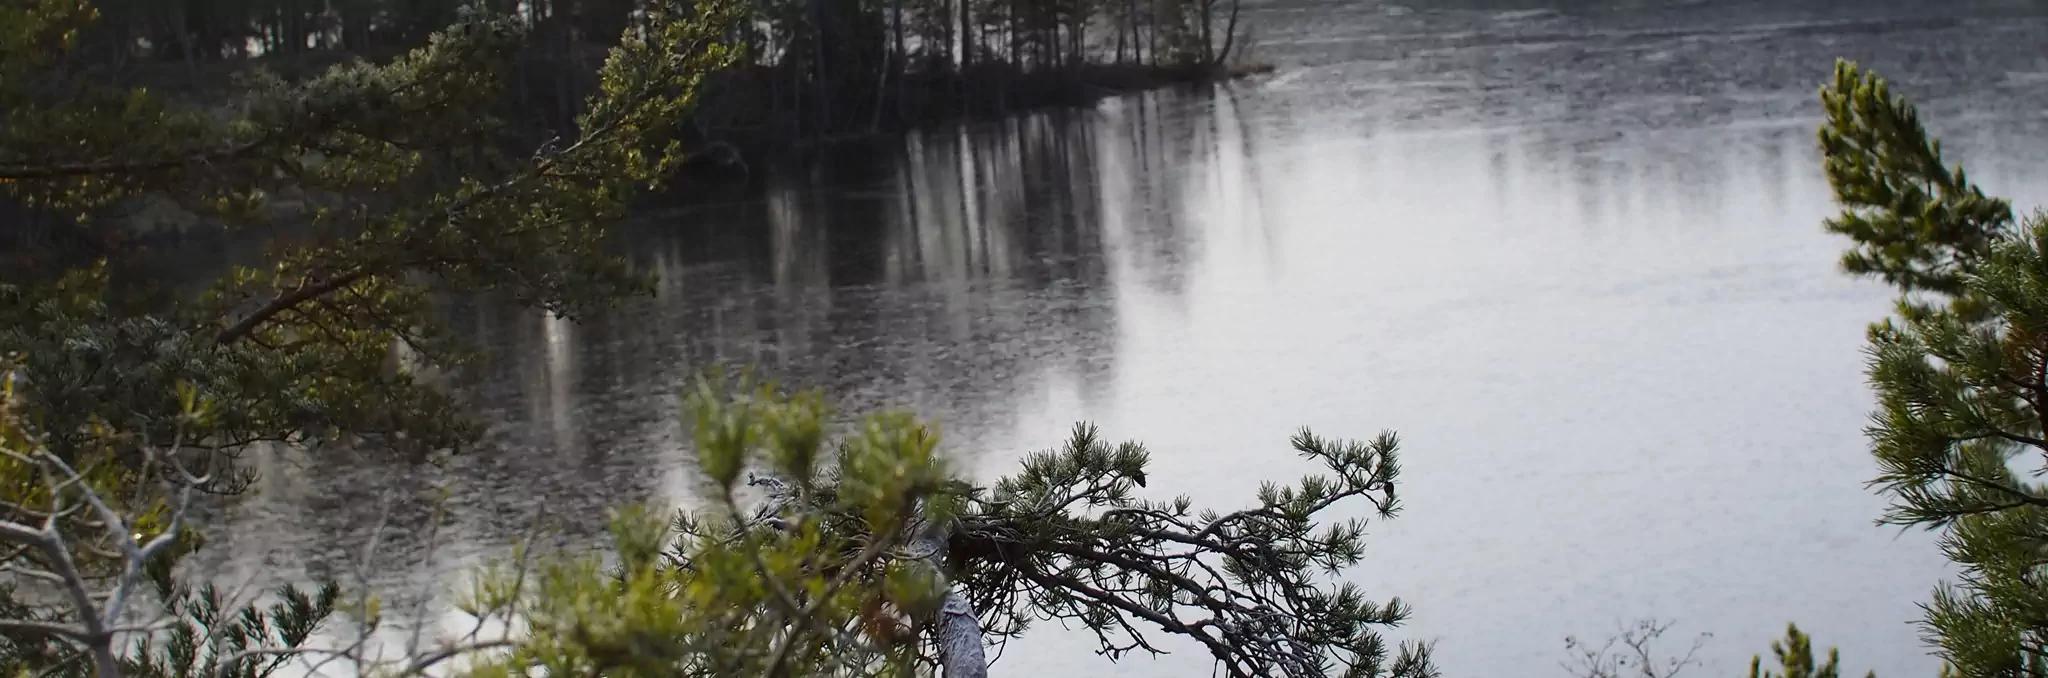 bakgrunds bild på en sjö